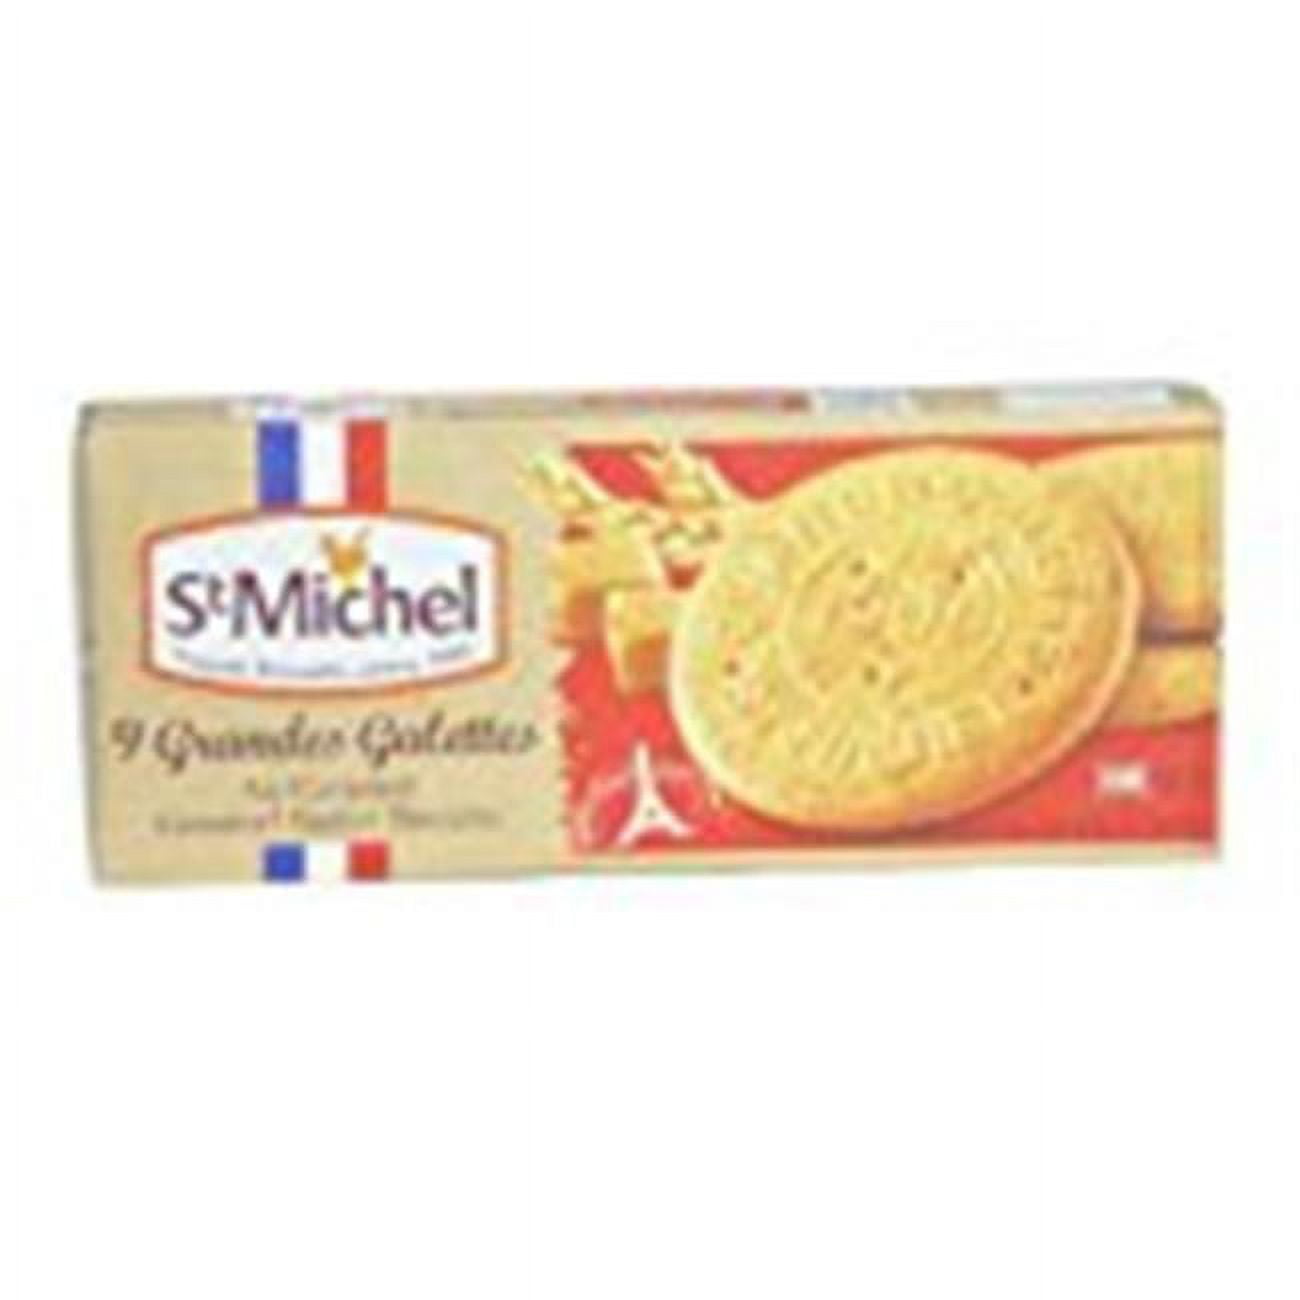 St Michel BWA05105 12 x 5.29 oz La Grande Galette Butter Cookies